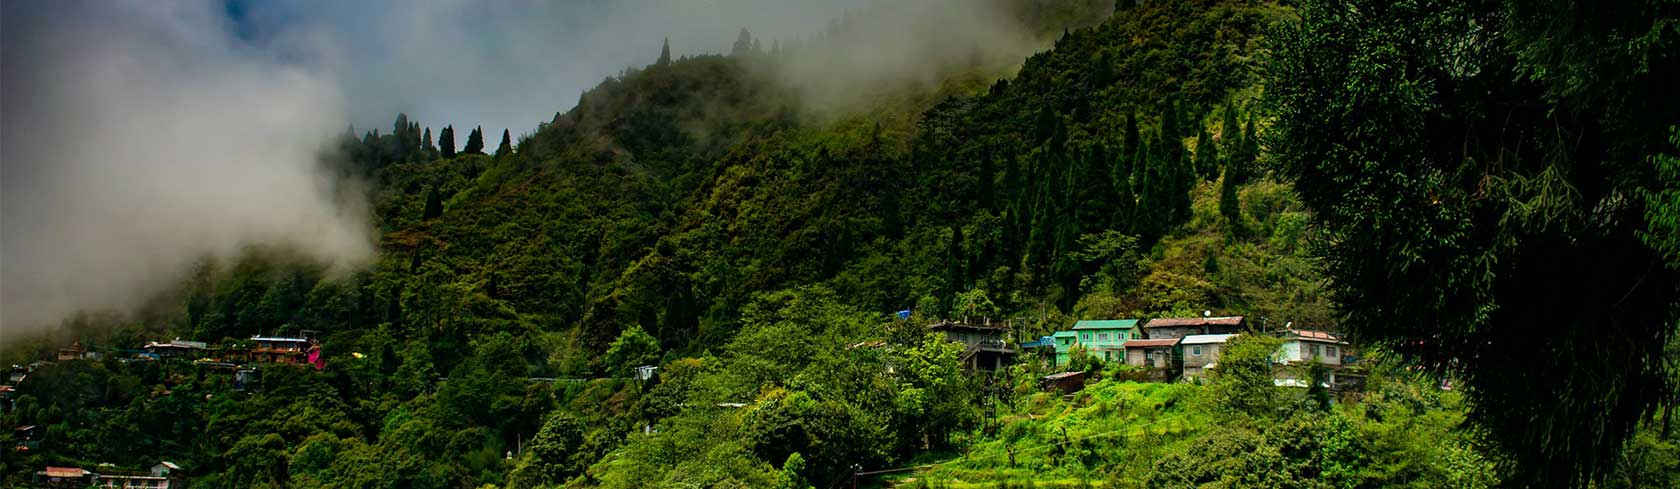 hill image on Darjeeling tour